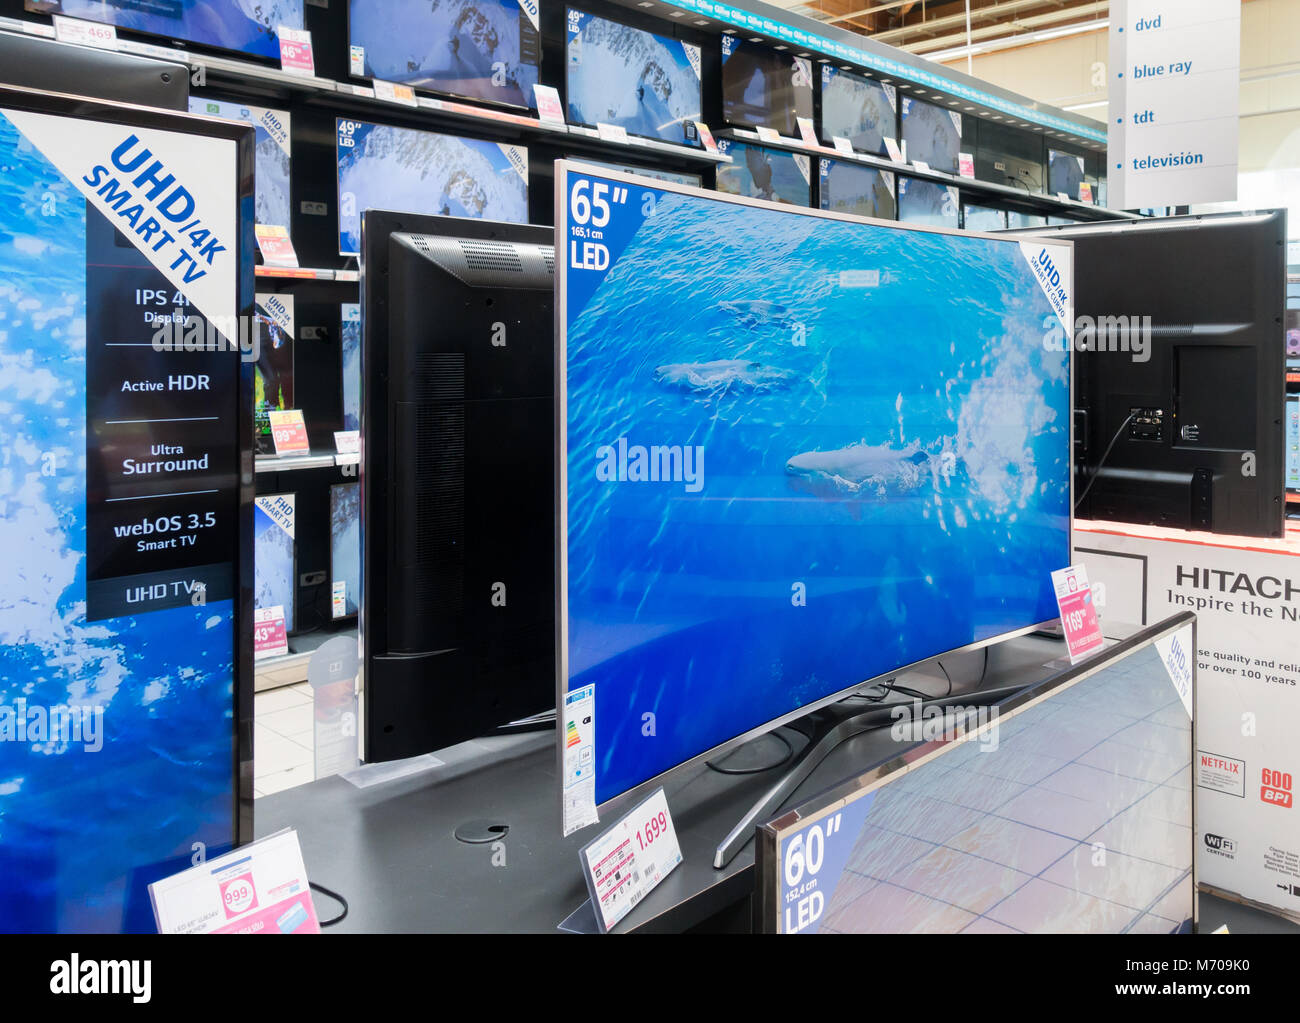 Samsung 65' UHD 4K curved smart TV in Spanish supermarket Stock Photo